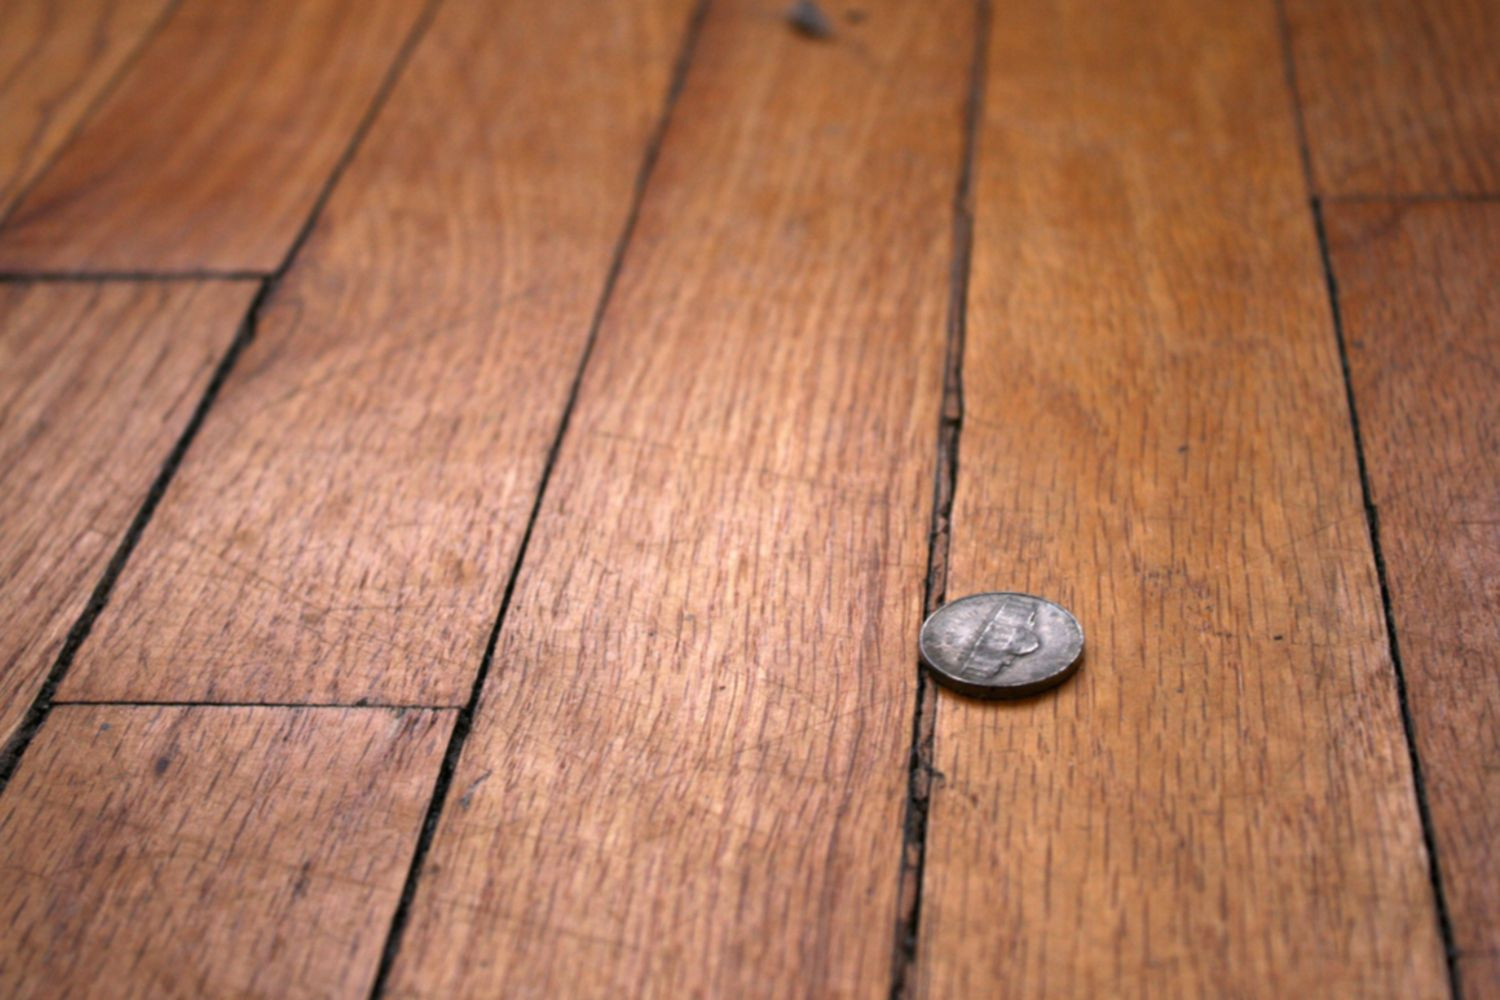 3 4 inch unfinished oak hardwood flooring of how to repair gaps between floorboards pertaining to wood floor with gaps between boards 1500 x 1000 56a49eb25f9b58b7d0d7df8d